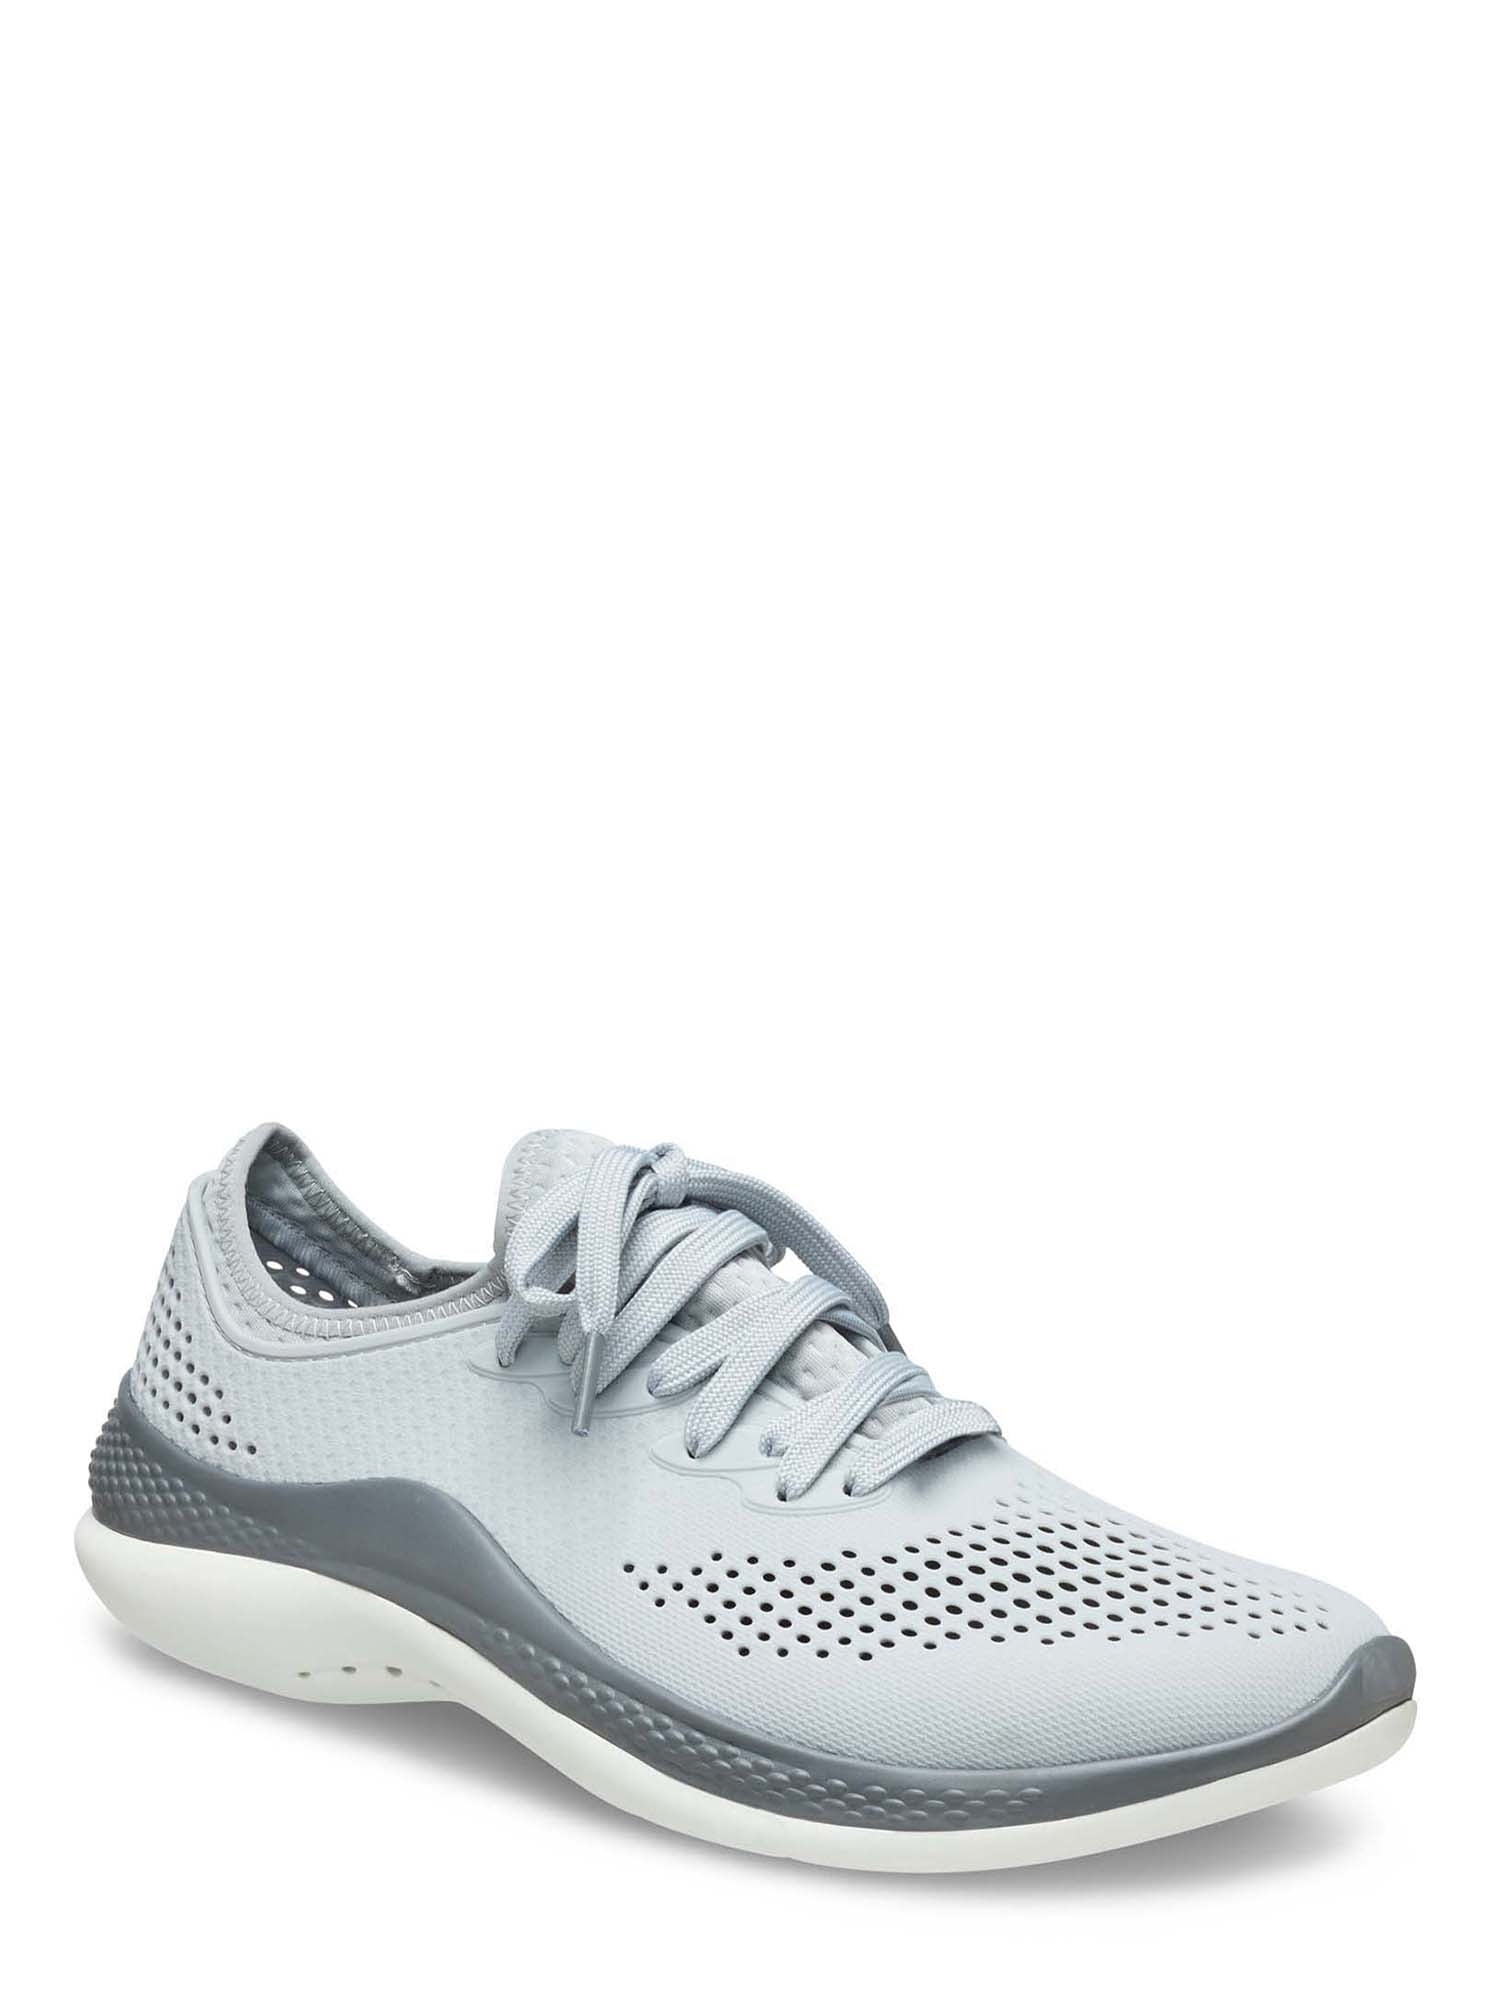 Crocs Men Navy/Blue Grey Casual Sneakers SKU: 118-206715-4TA-10